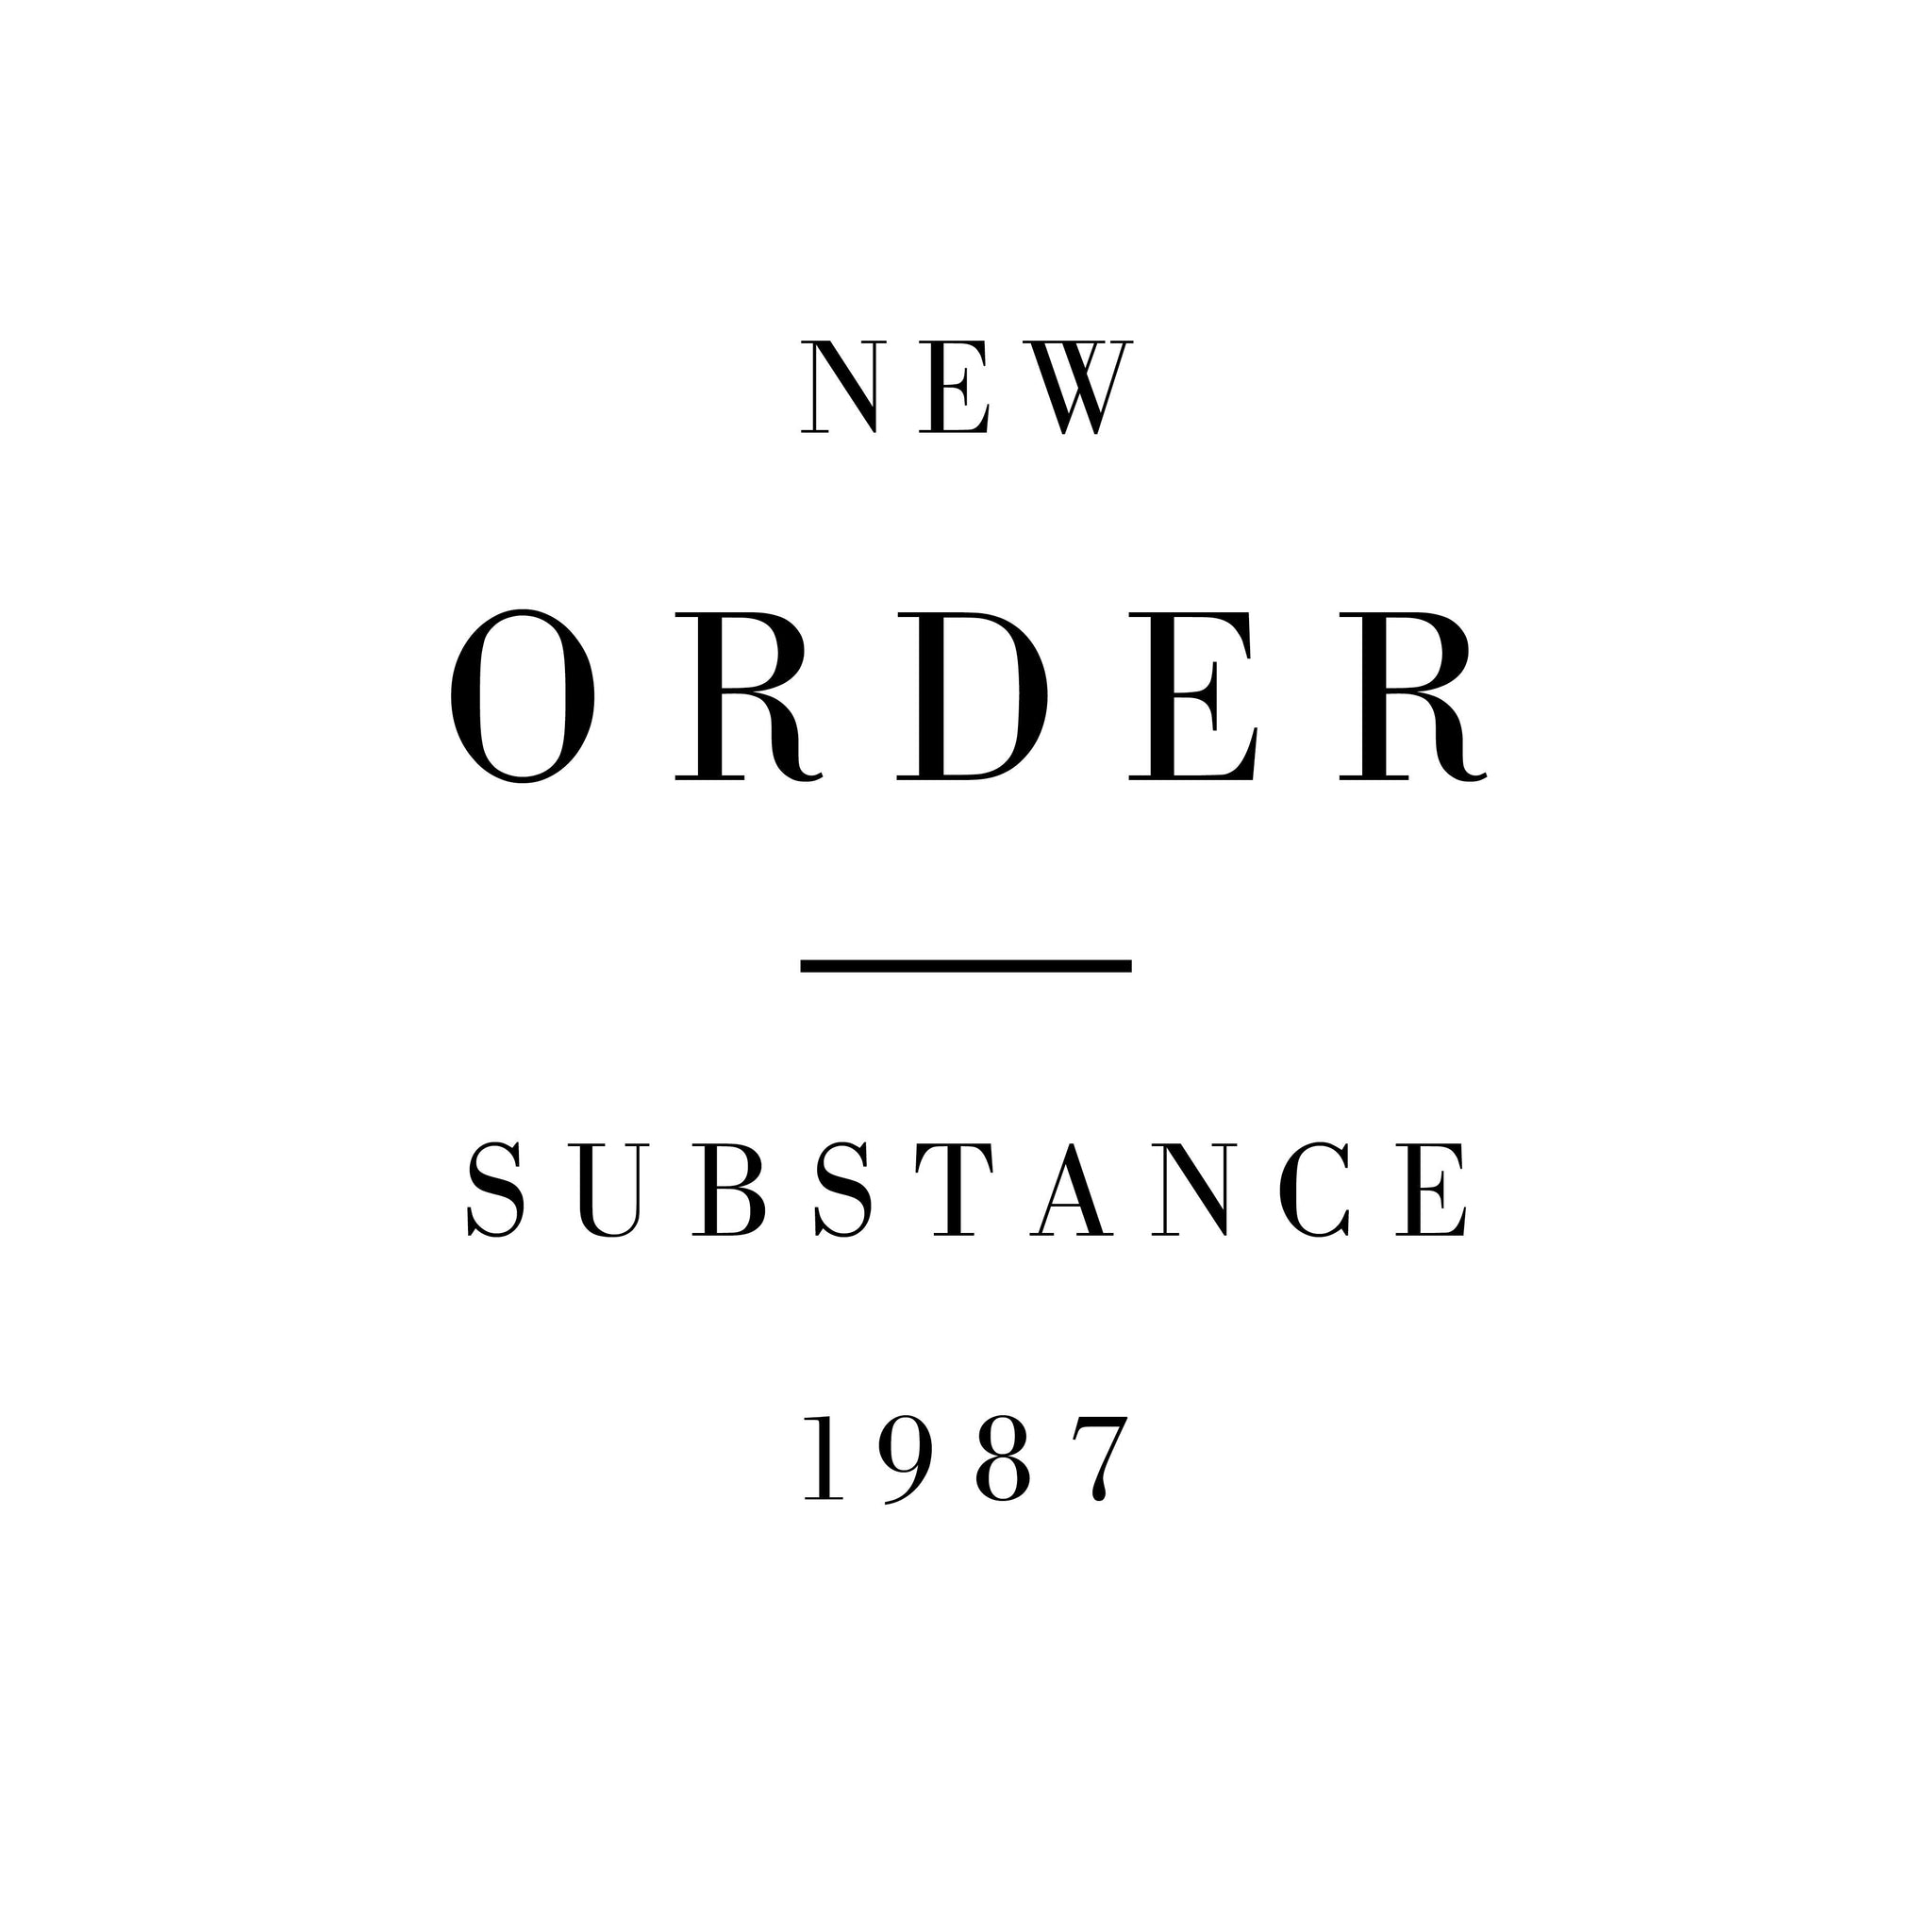 NEW ORDER - Substance '87 (Remastered) - 2CD [NOV 10]